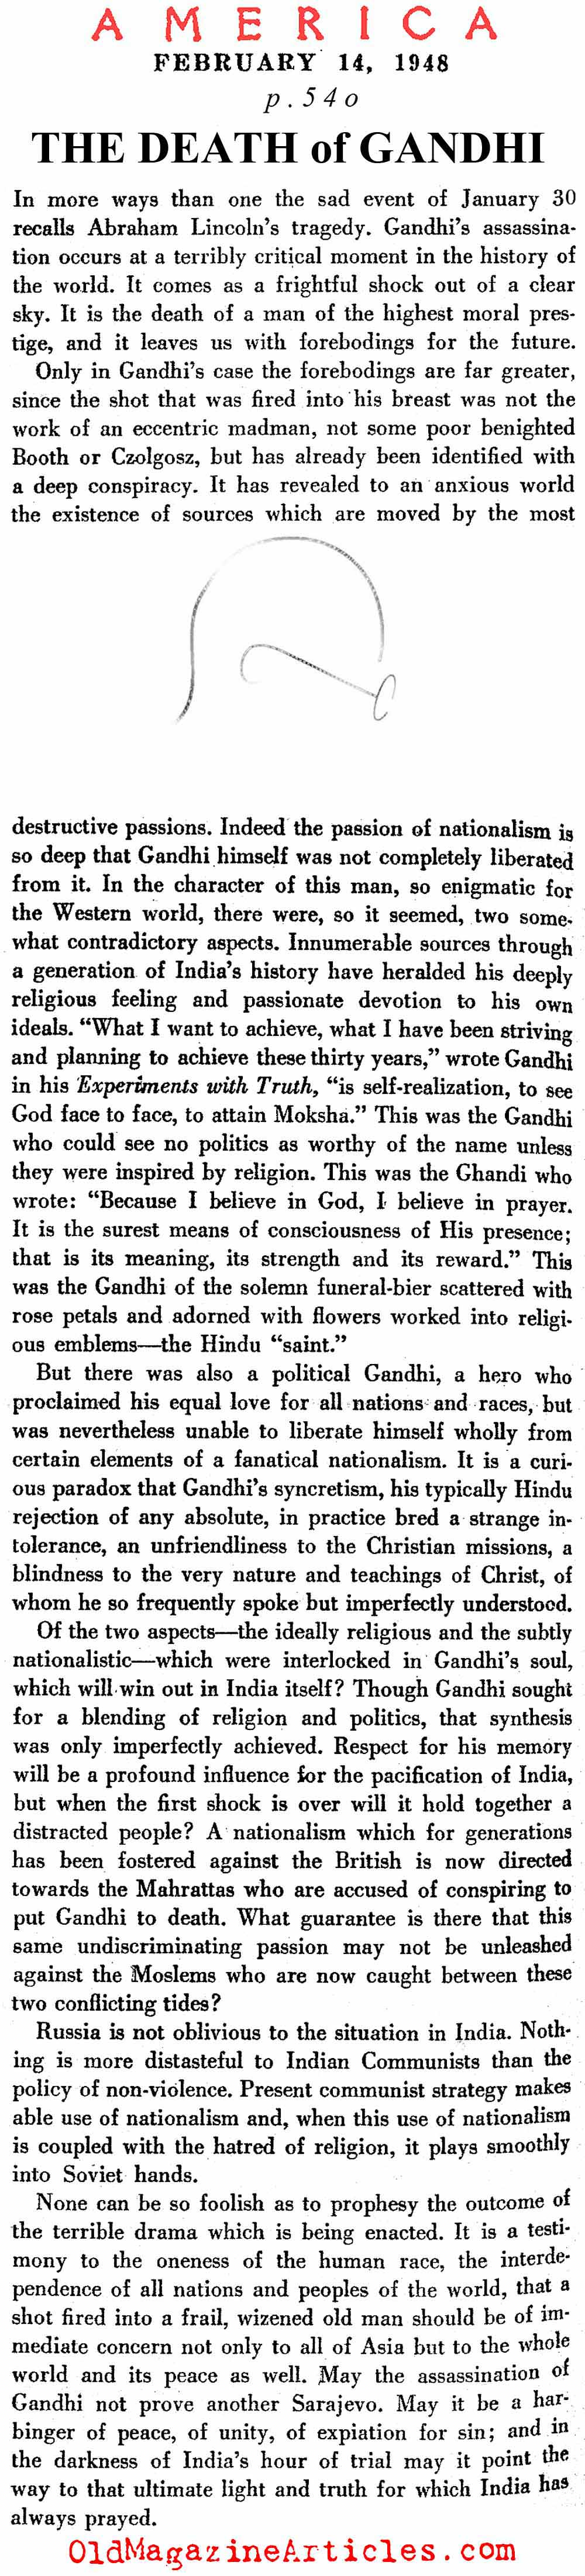 Mahatma Gandhi, RIP (America Weekly, 1948)